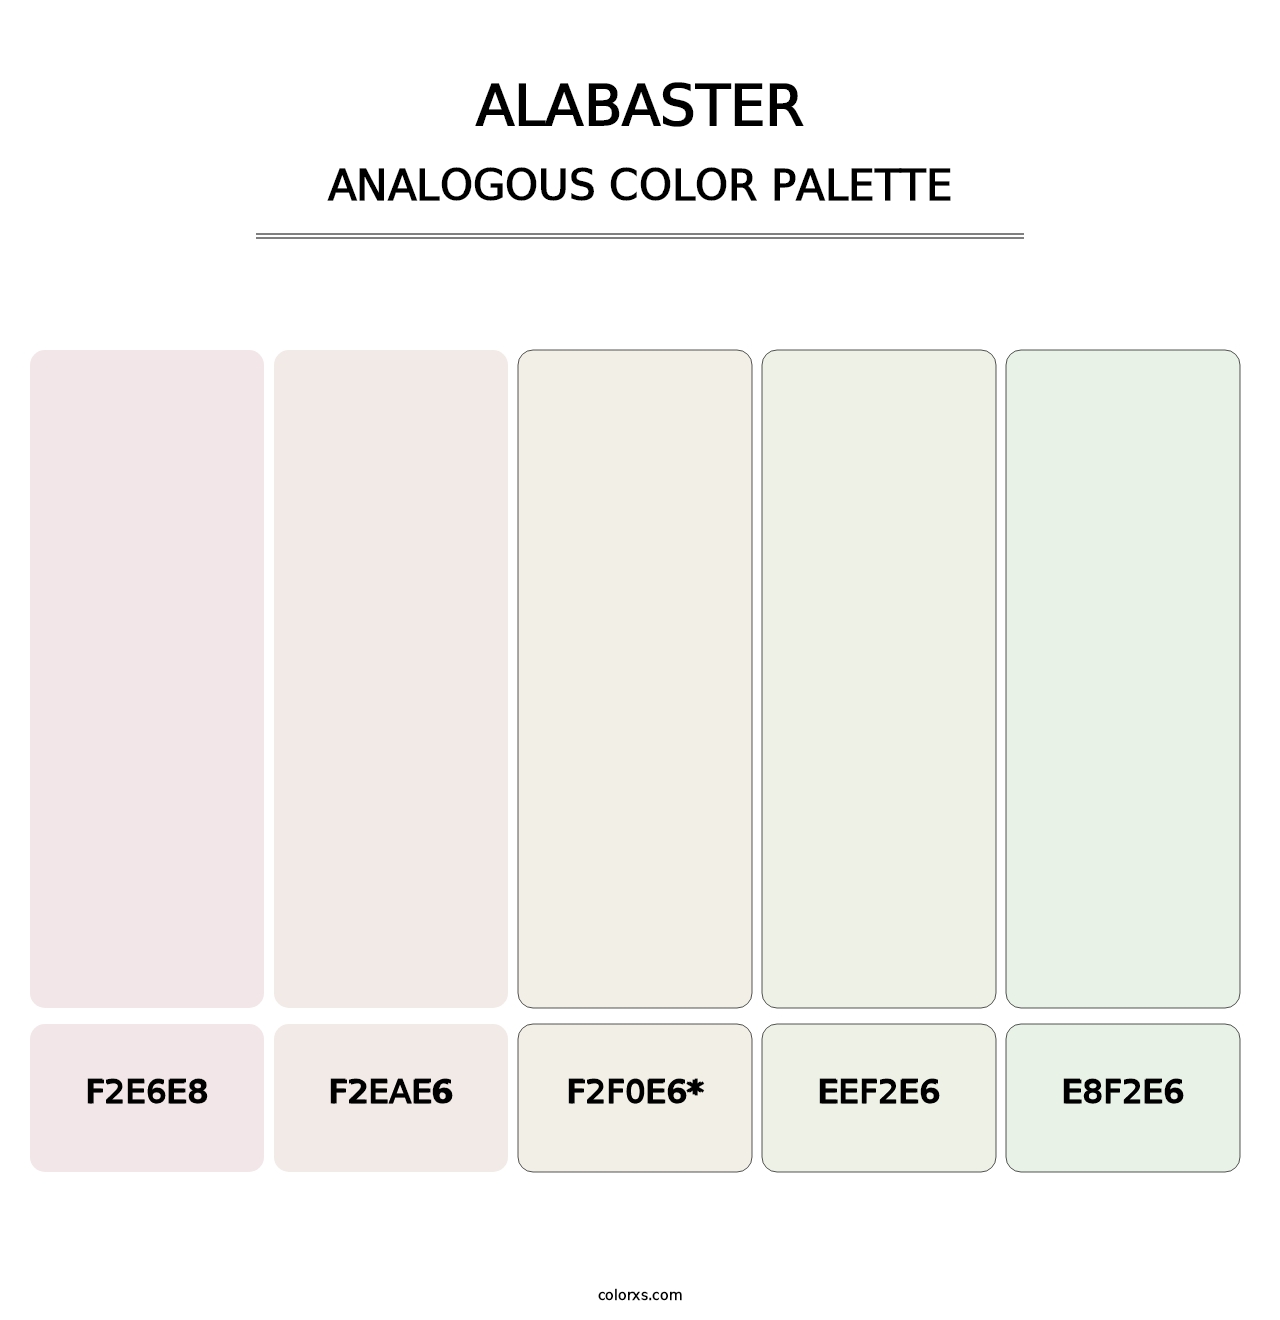 Alabaster - Analogous Color Palette